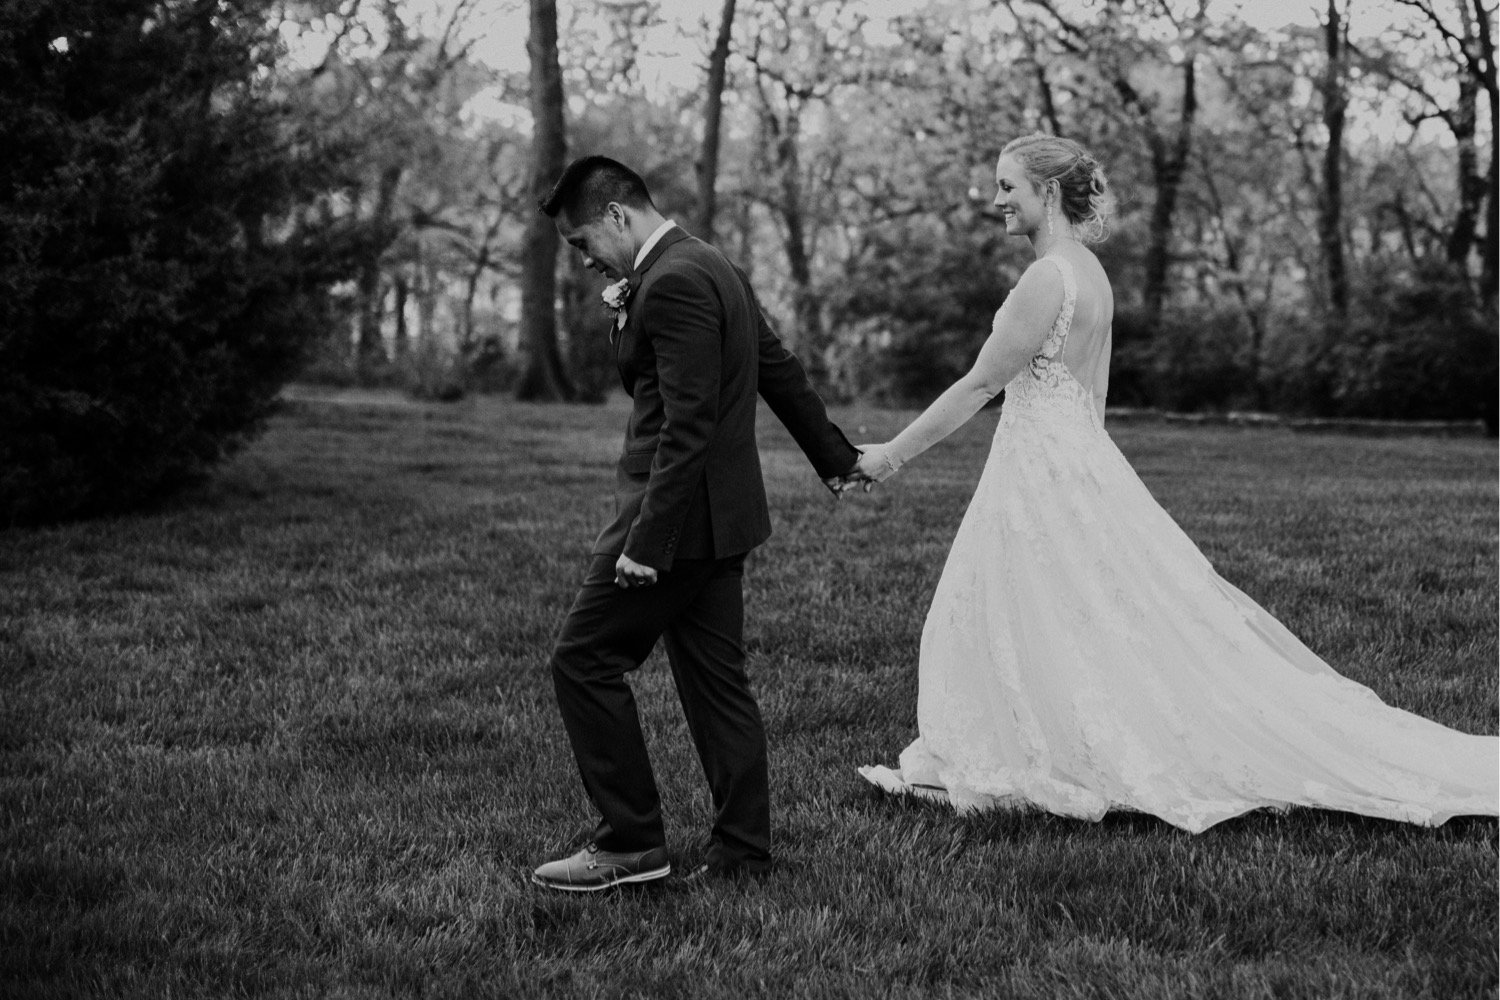 072_Alyssa&Vince-706-2_Hawthorne-house-kansas-city-wedding-photography-missouri-parkville-kelsey-diane-spring-bride-groom.jpg